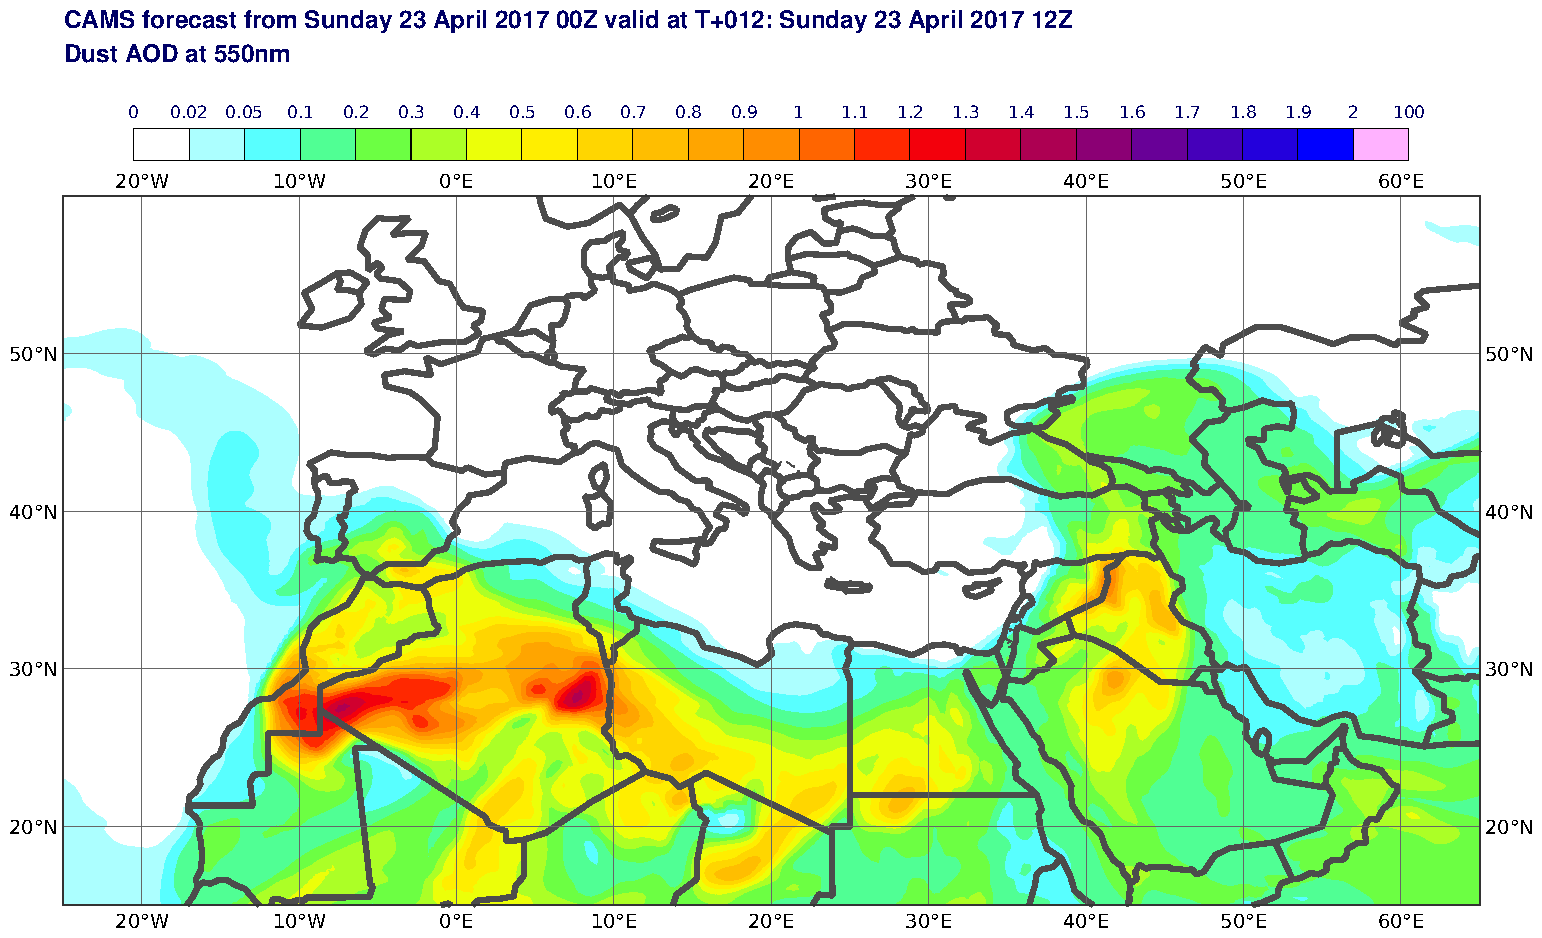 Dust AOD at 550nm valid at T12 - 2017-04-23 12:00